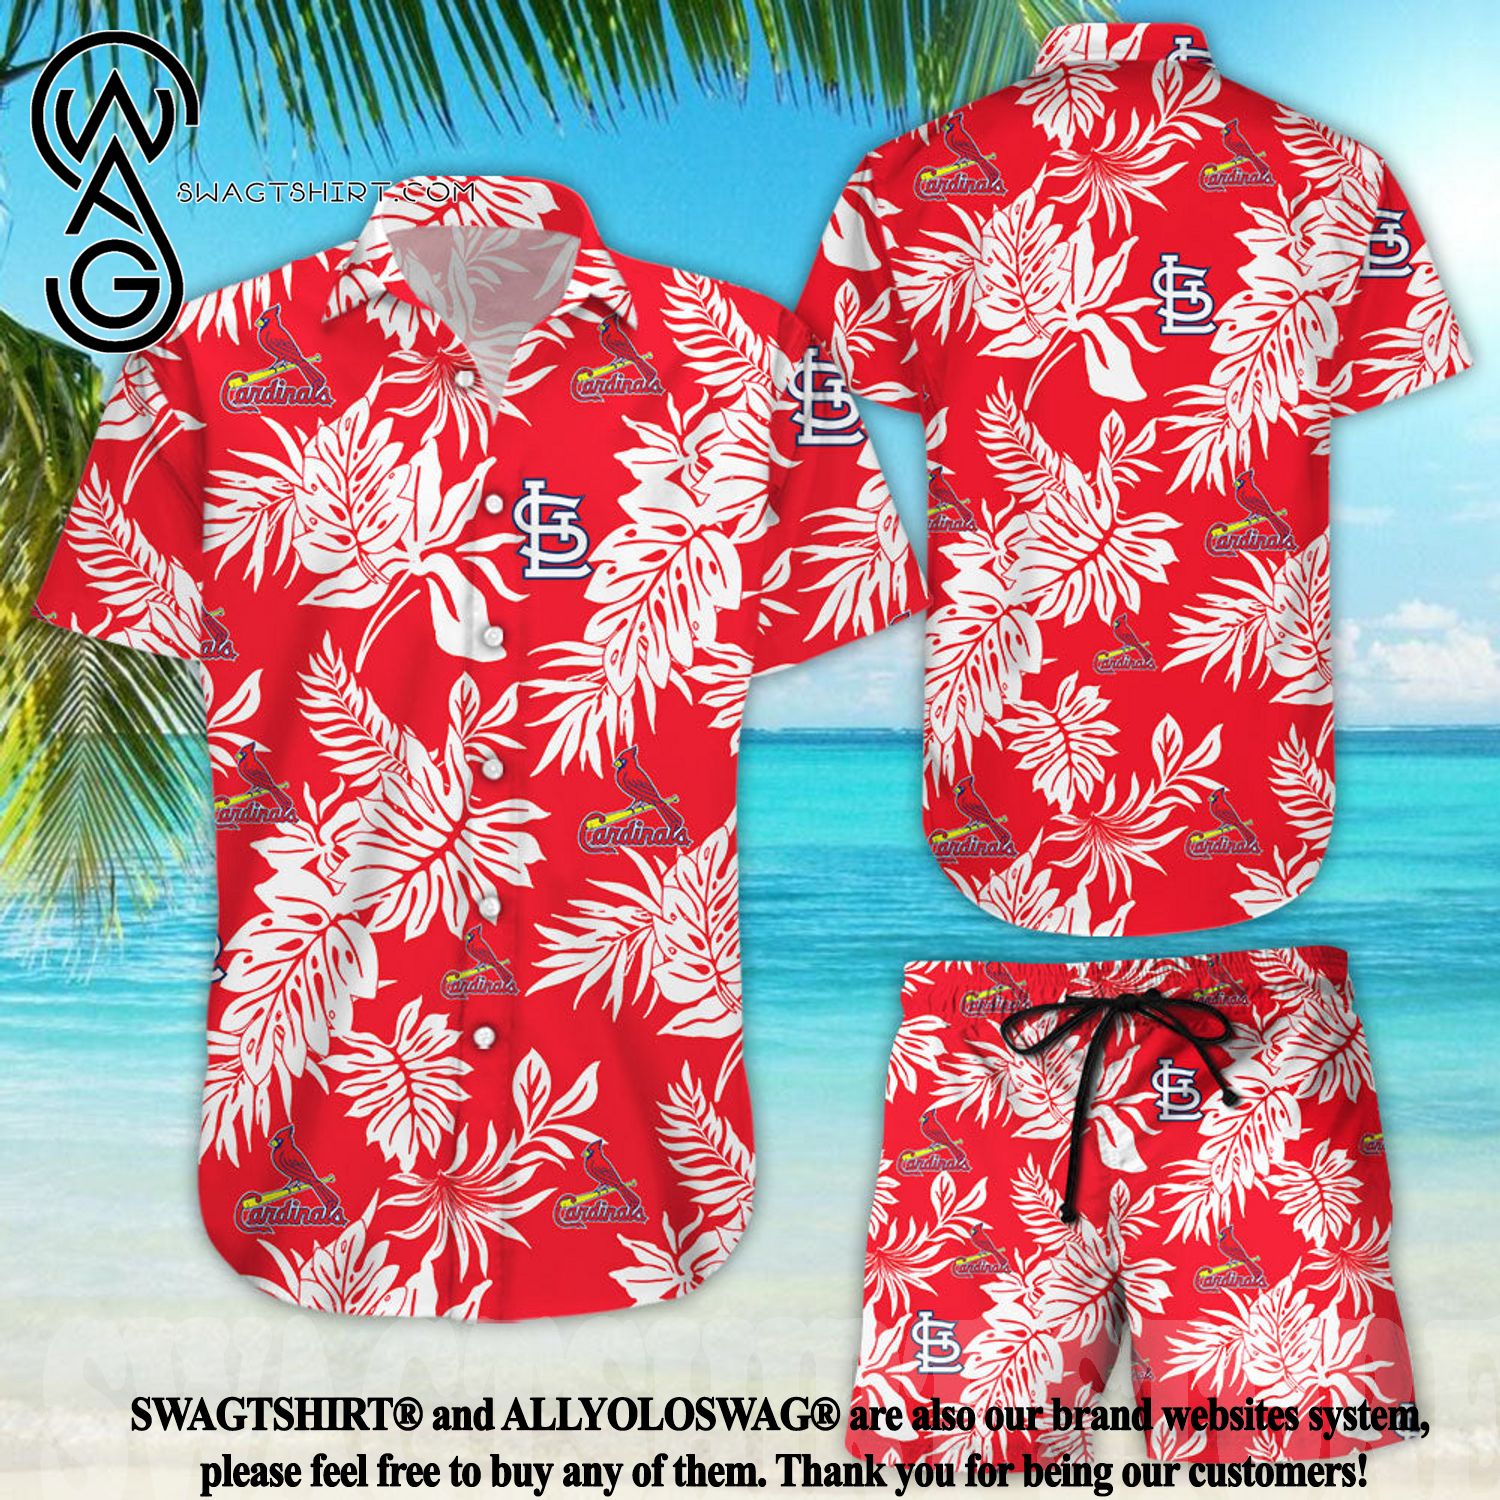 St. Louis Cardinals MLB Hawaiian Shirt Dry Season Aloha Shirt